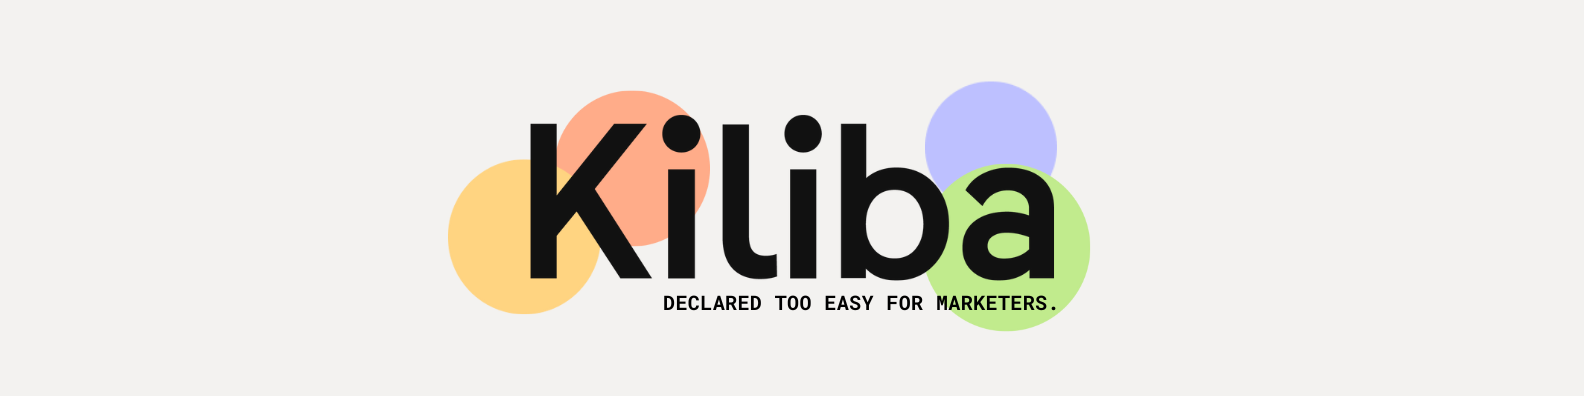 Avis Kiliba - Marketing Automation : DECLARED TOO EASY FOR MARKETERS - Appvizer